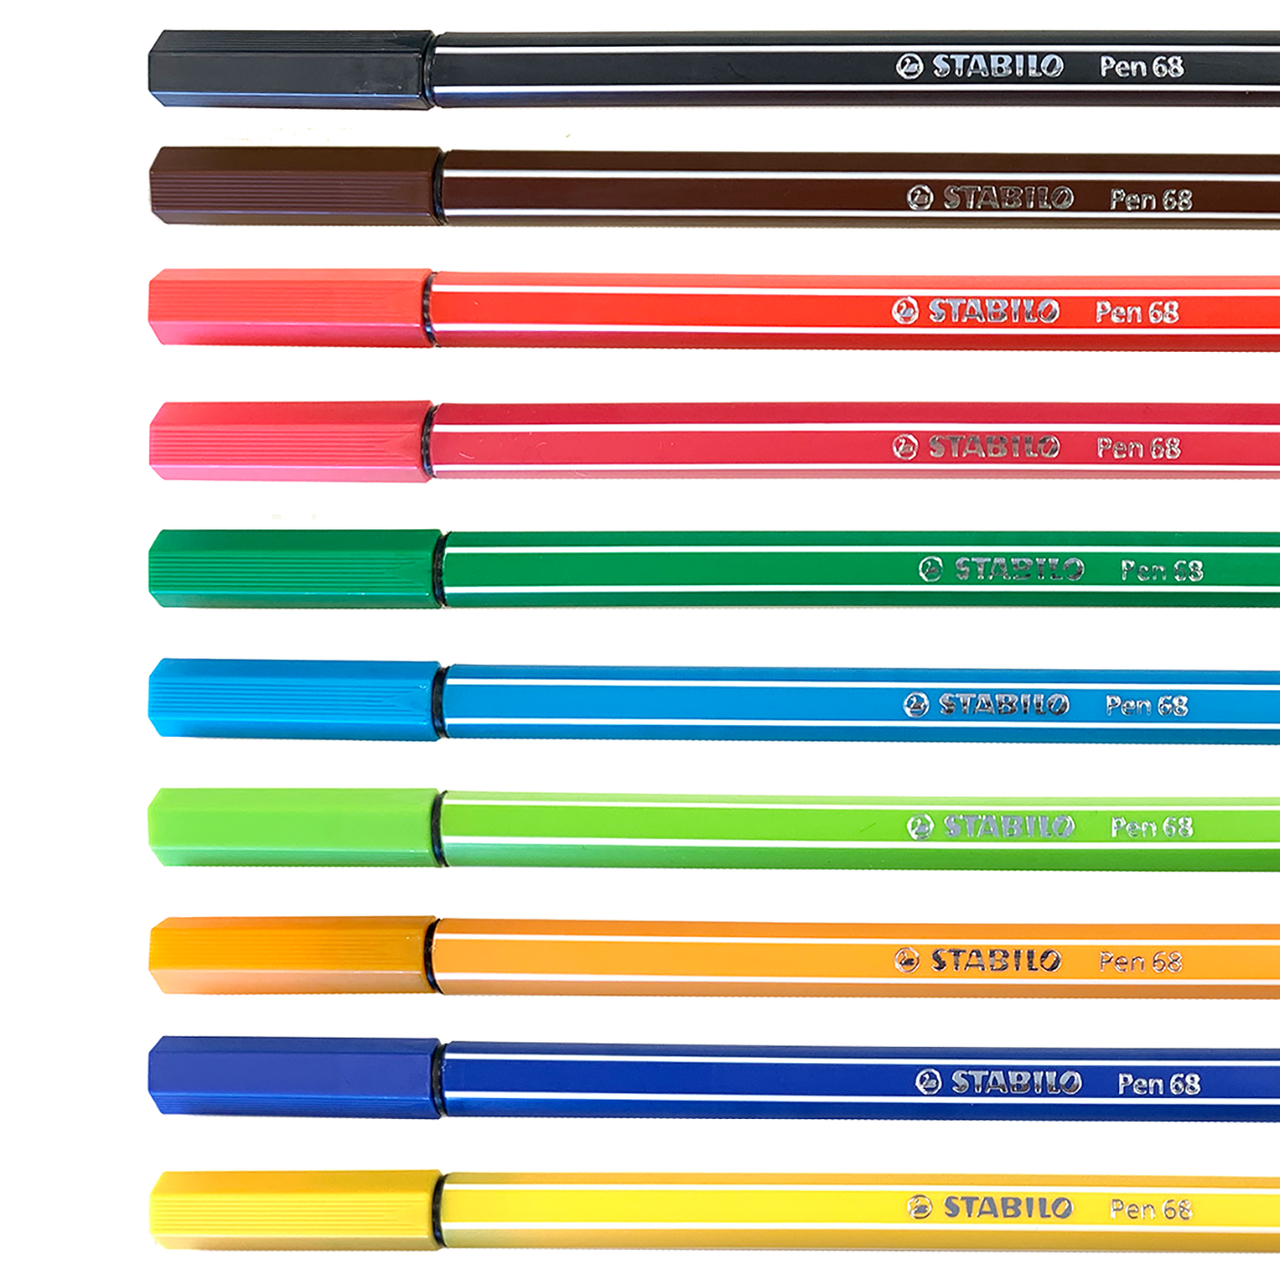 Vervagen Wapenstilstand Sada STABILO Pen 68, Multicolor Set of 10